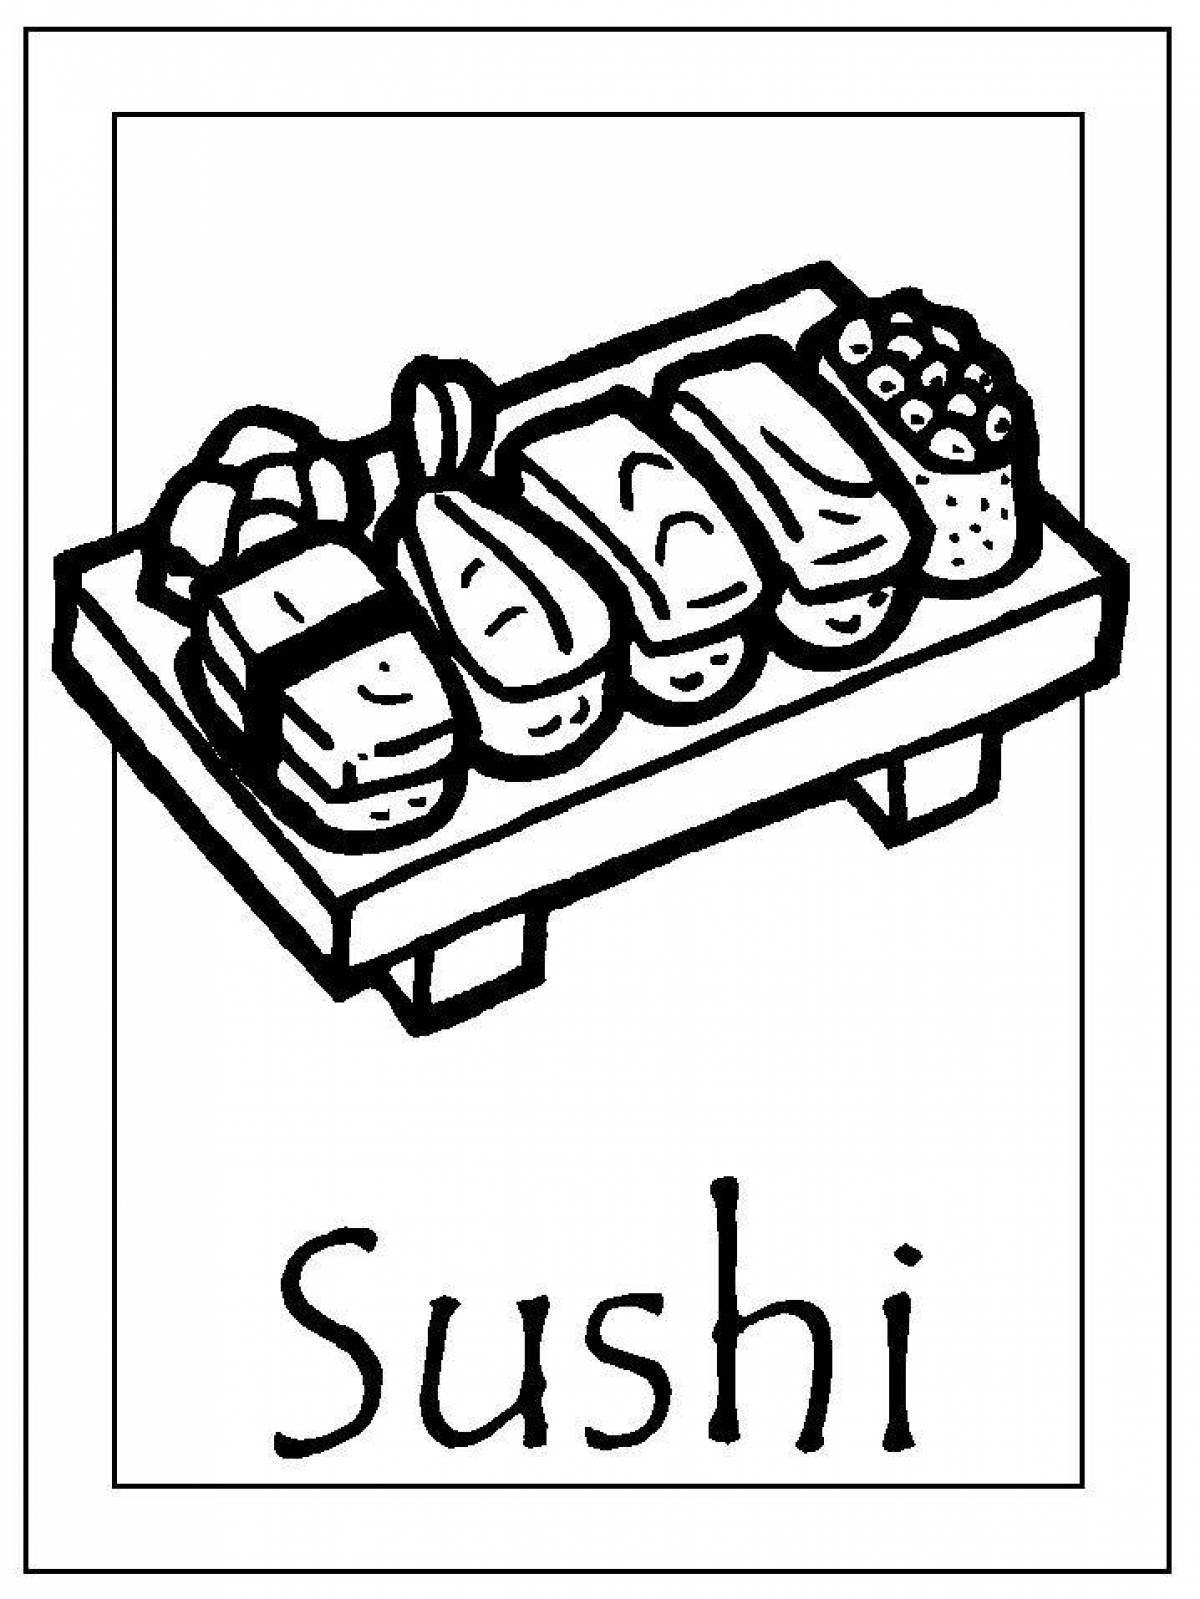 Creative sushi coloring book